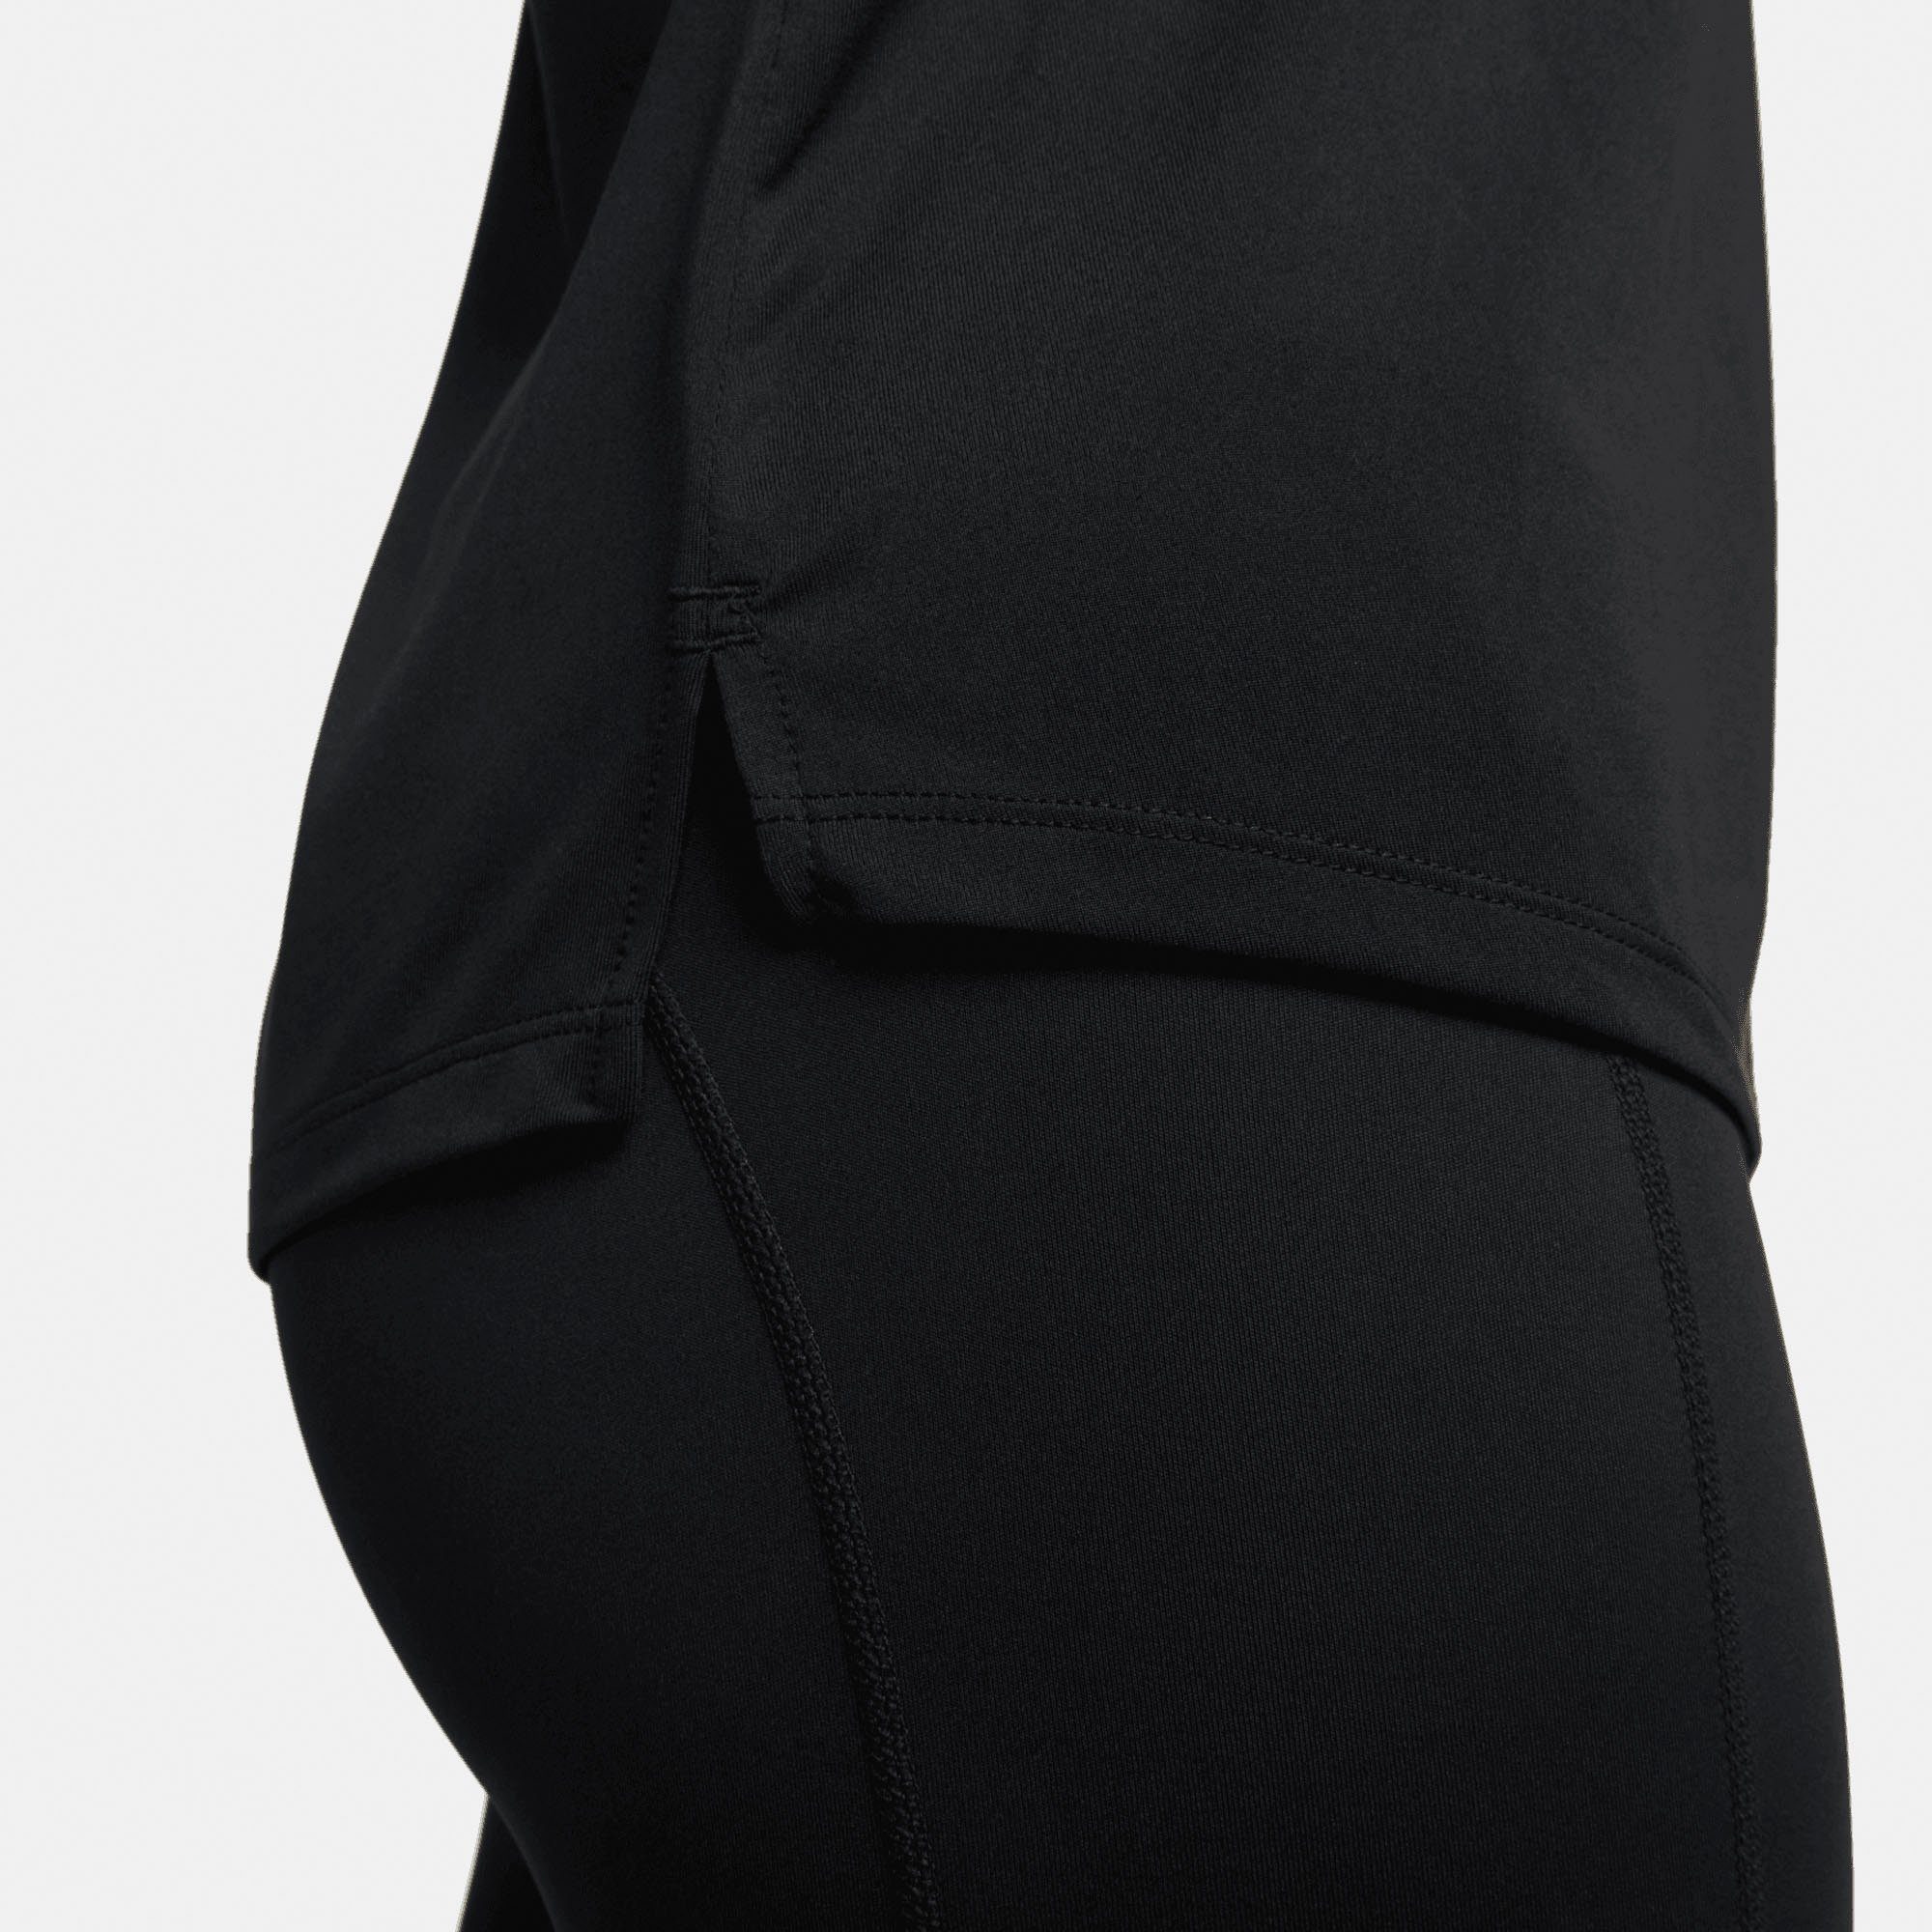 Short-Sleeved Women's Dri-FIT BLACK Swoosh Top Laufshirt One Nike